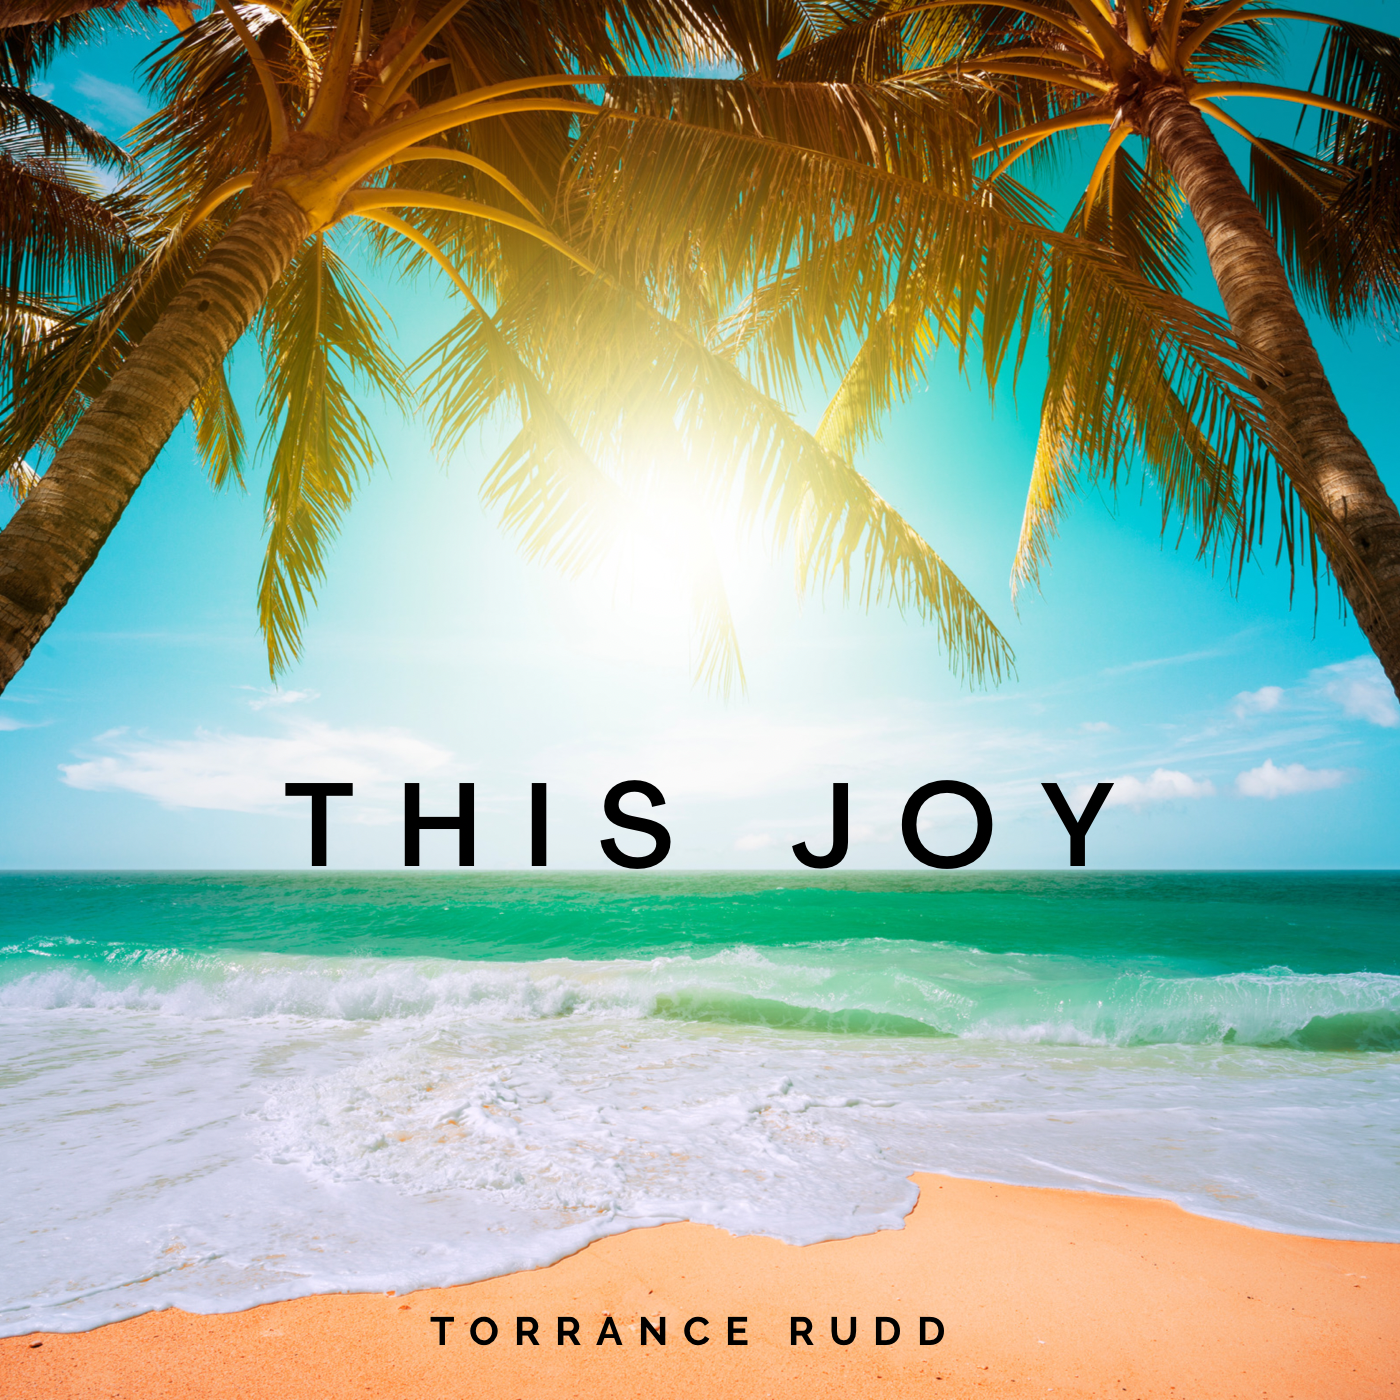 Torrance Rudd single cover